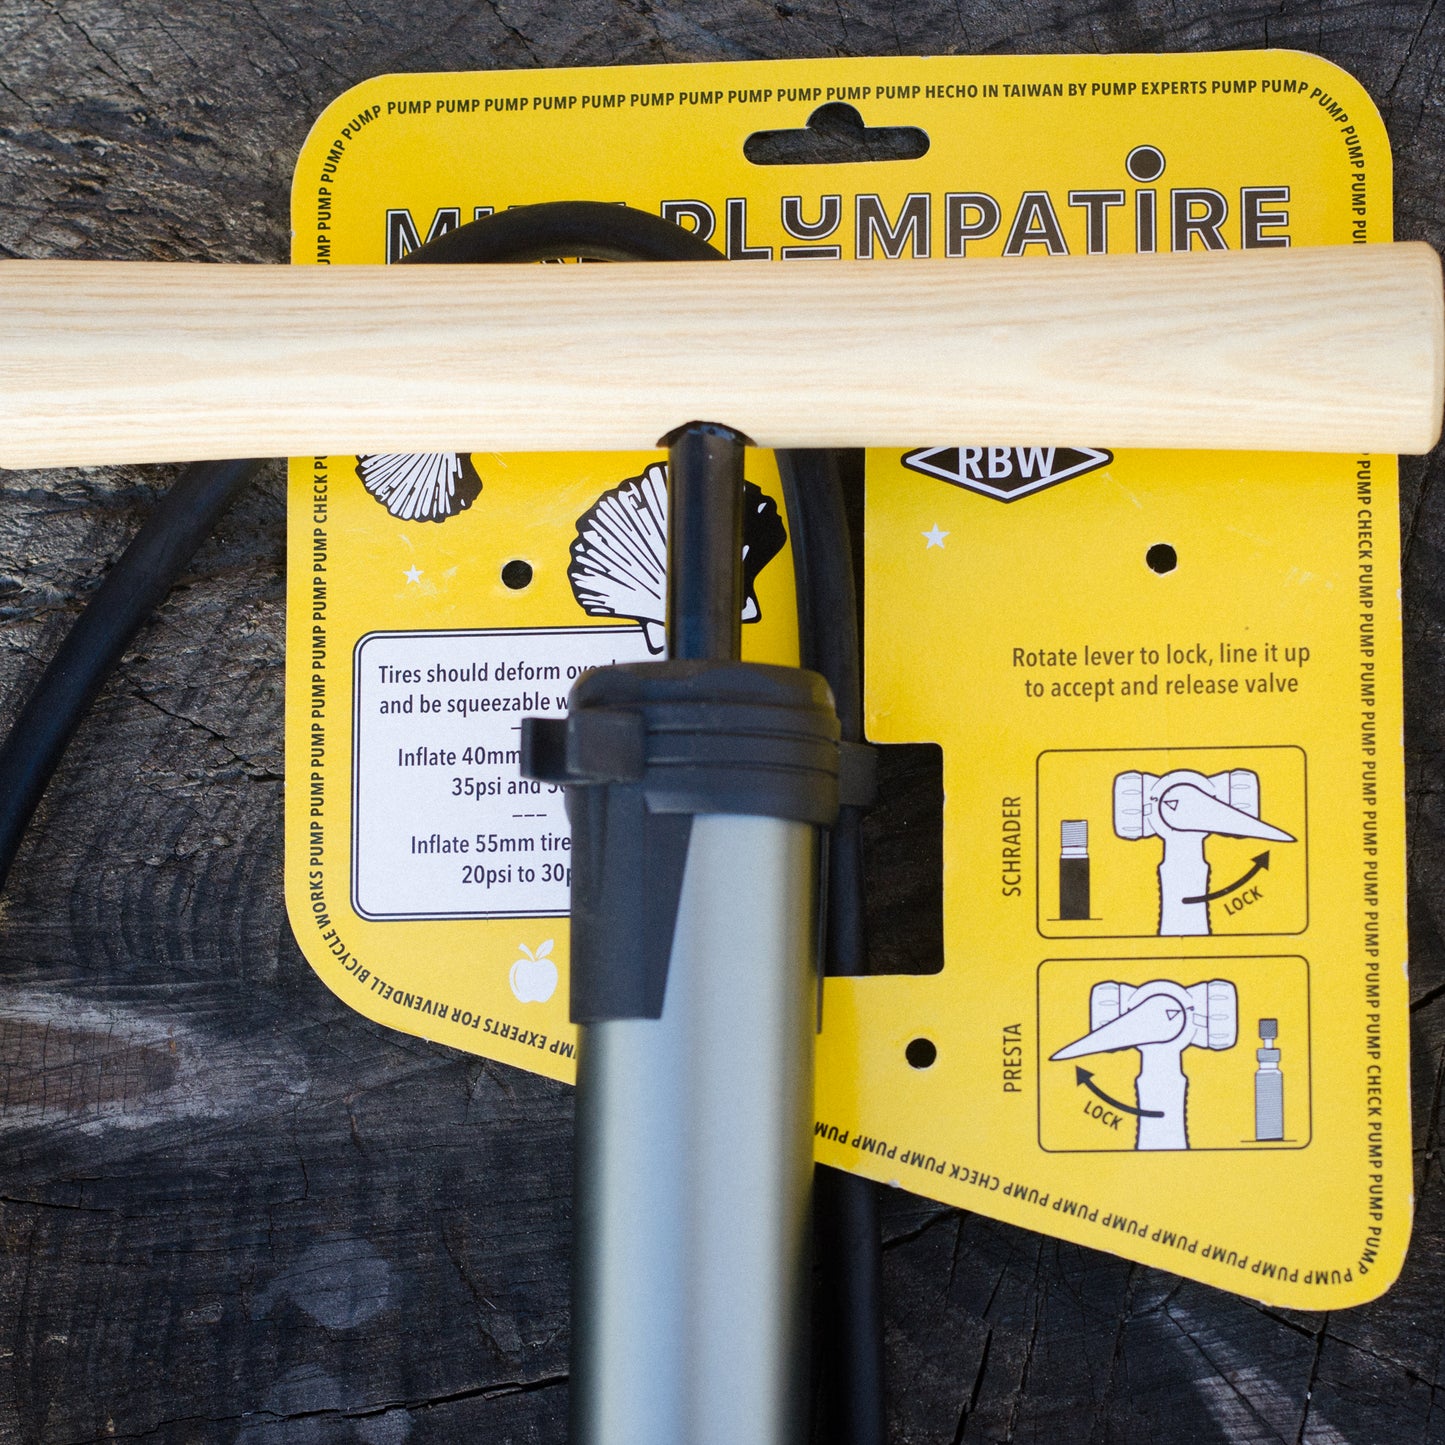 Mike PLUMPATIRE - a wood-handled Floor Pump